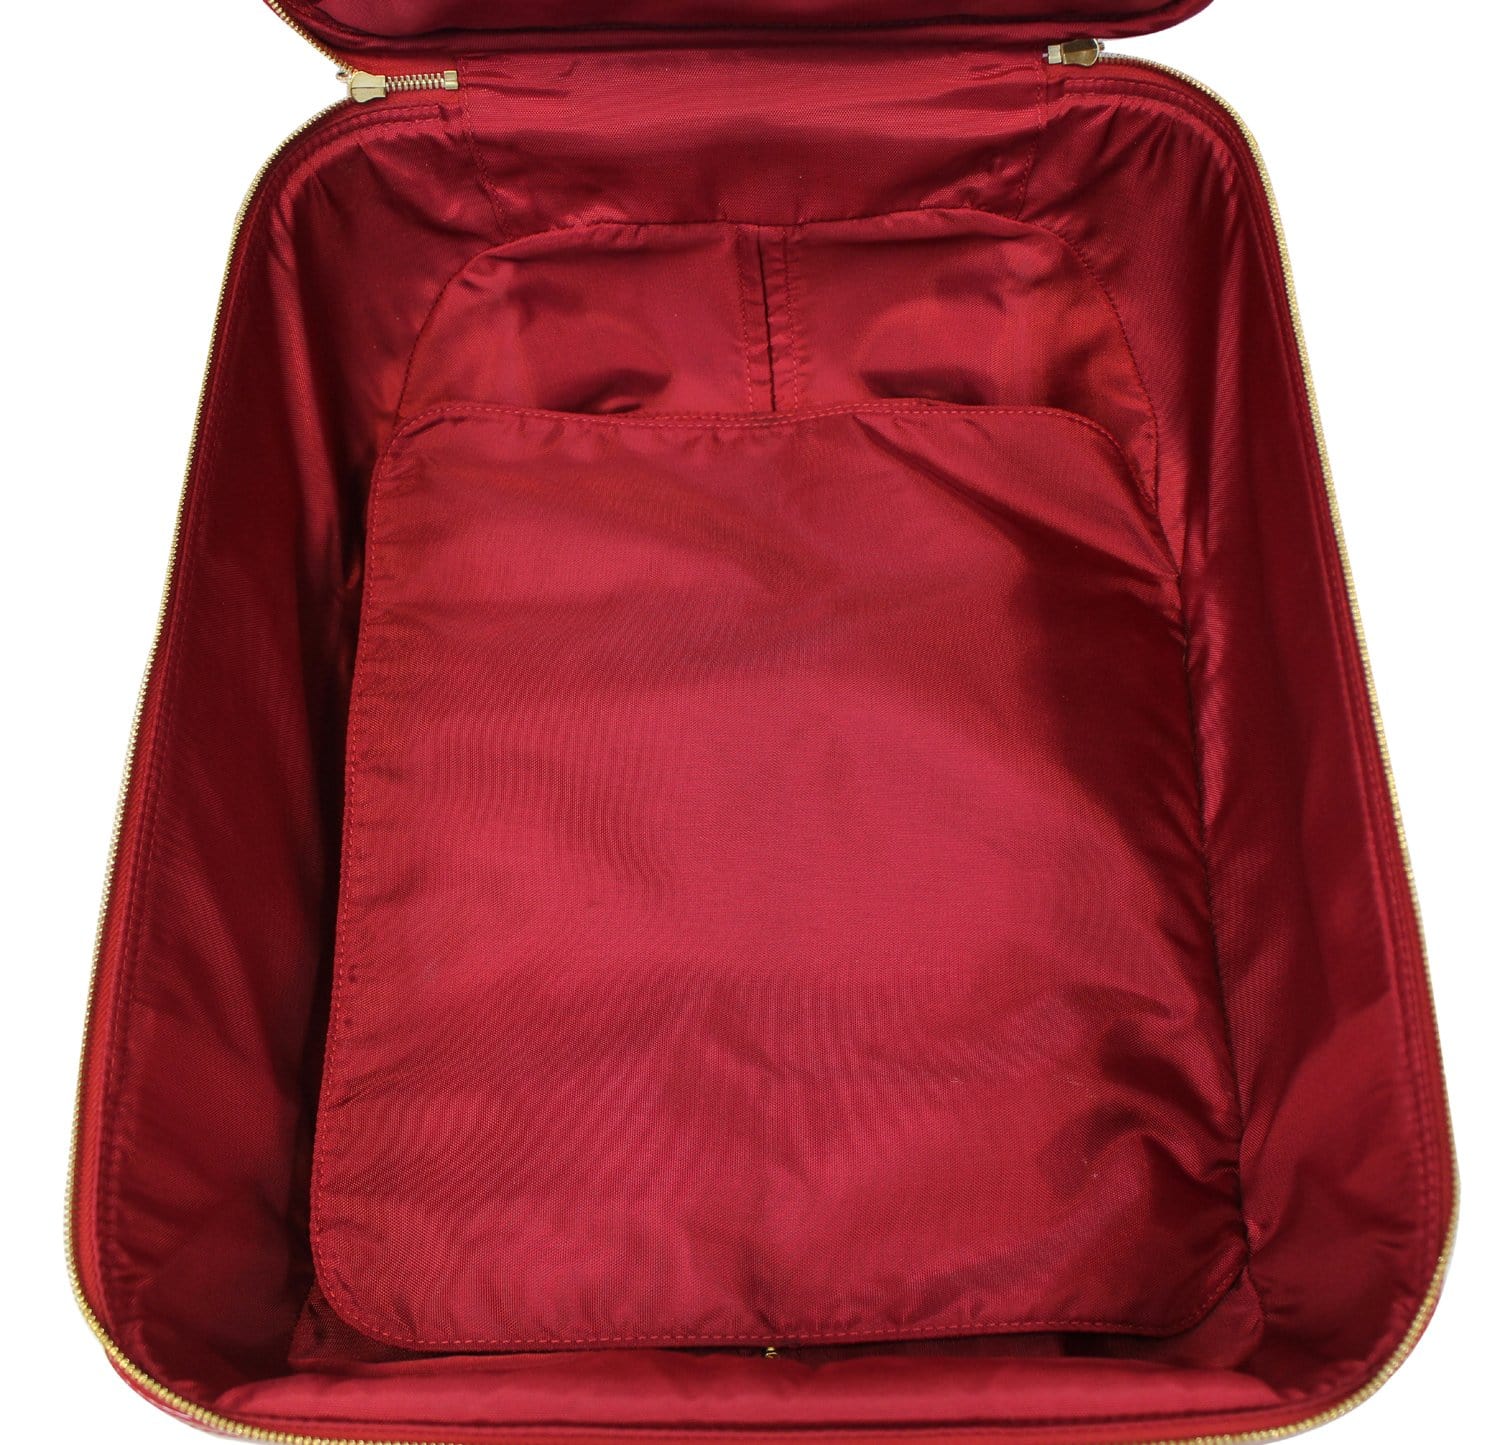 Louis Vuitton Rose Pop Monogram Vernis Pegase 55 Suitcase Louis Vuitton